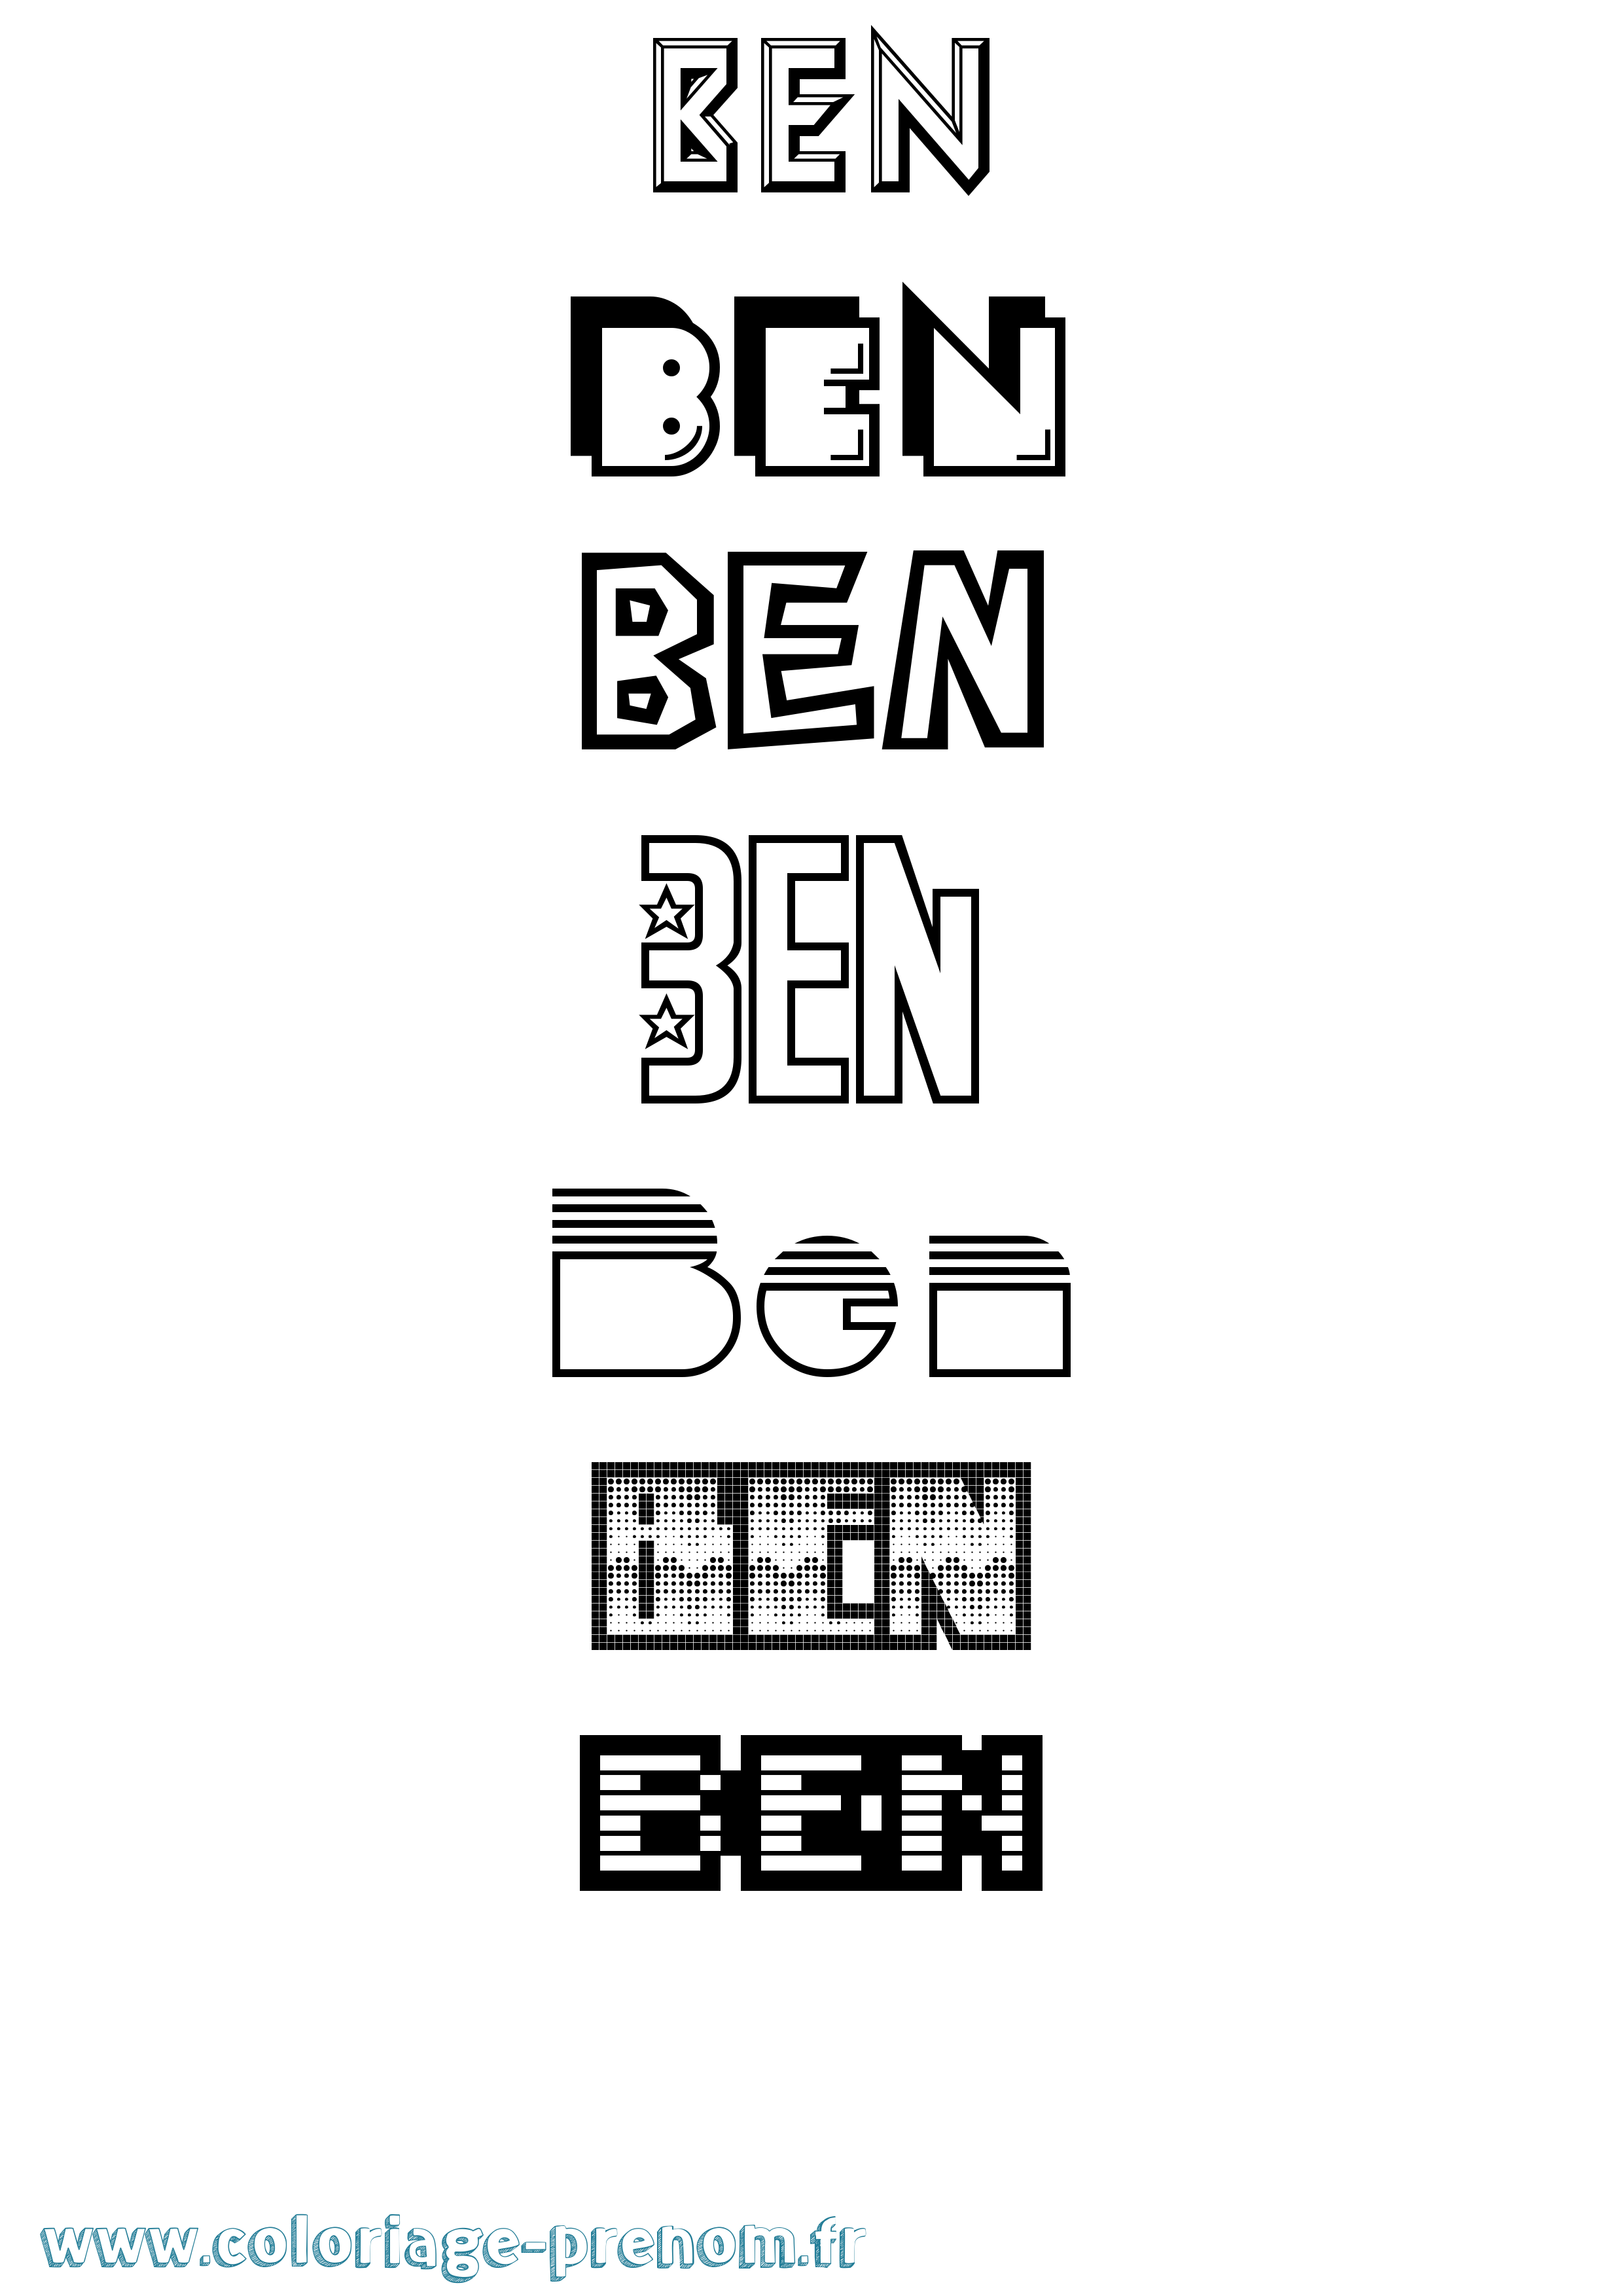 Coloriage prénom Ben